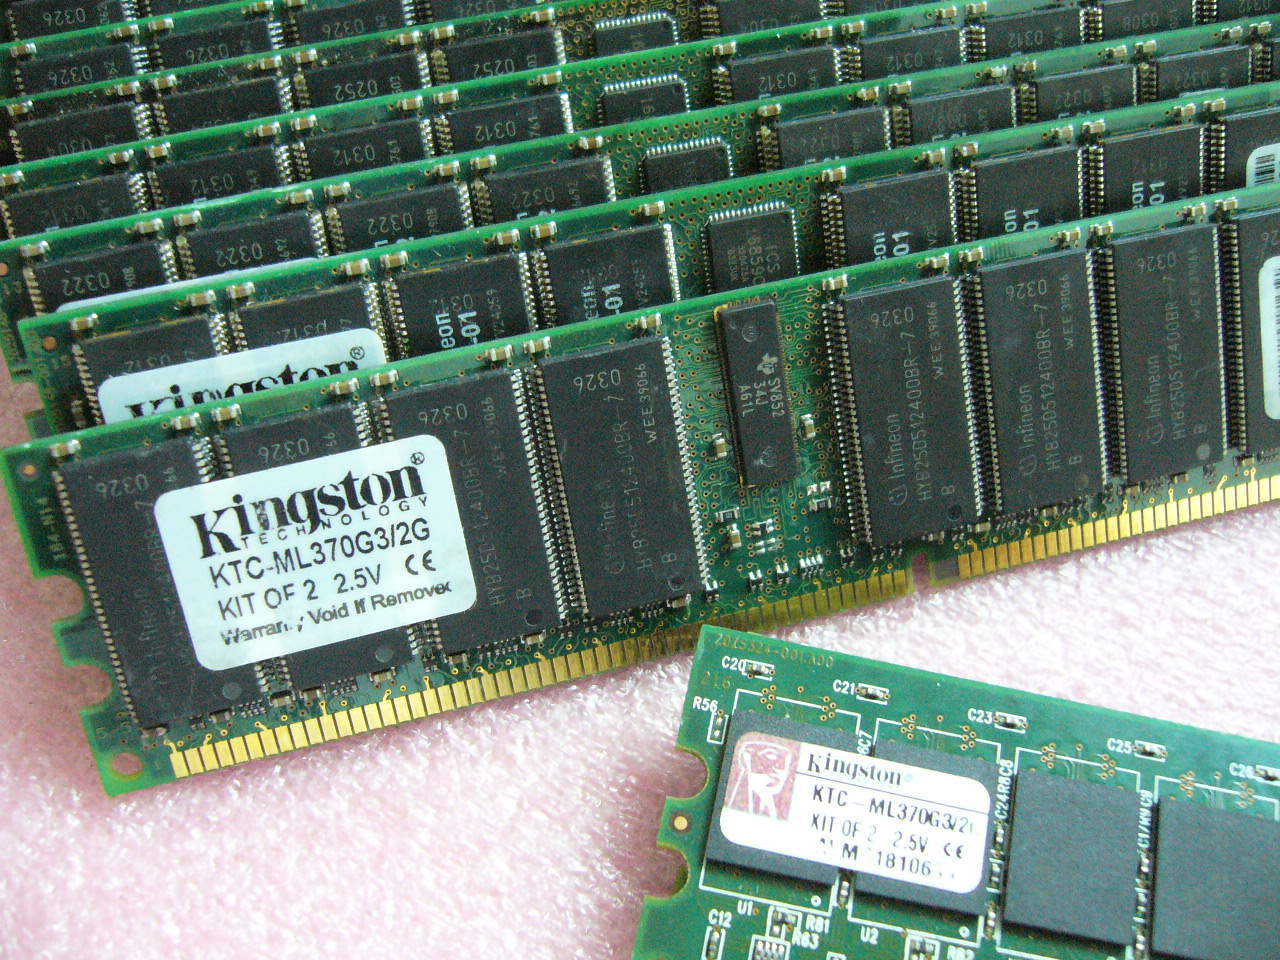 QTY 1x 1GB Kingston KTC-ML370G3/2G DDR 266,PC2100R ECC Registered Server memory